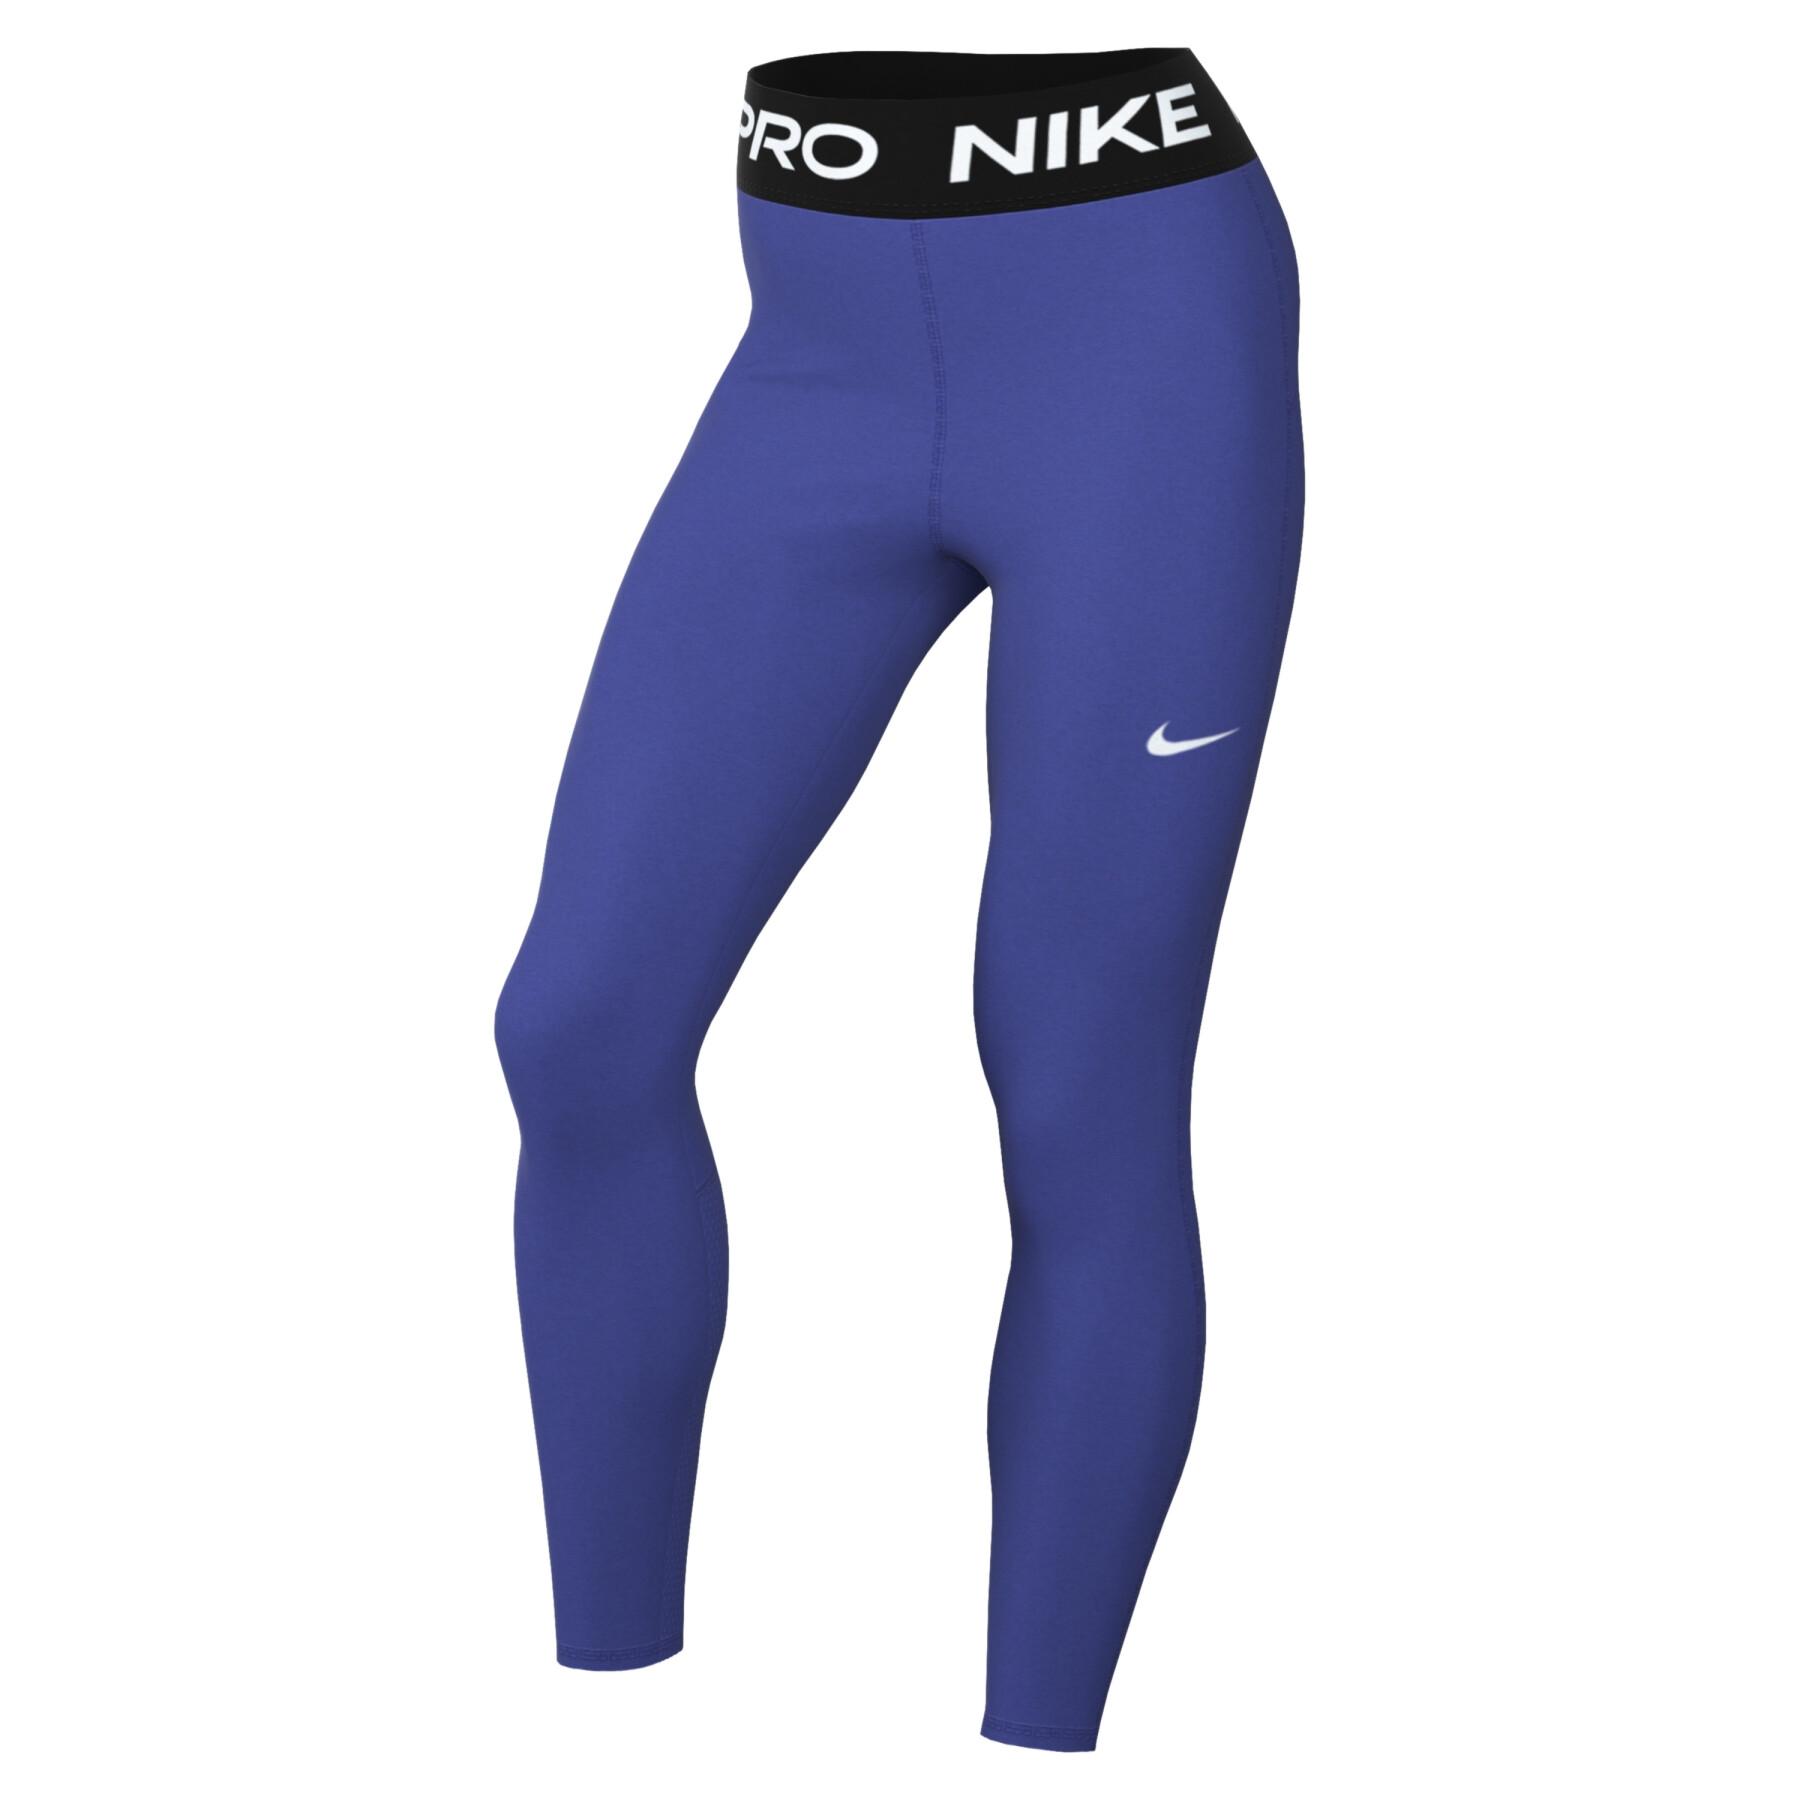 Leggings für Frauen Nike Pro 365